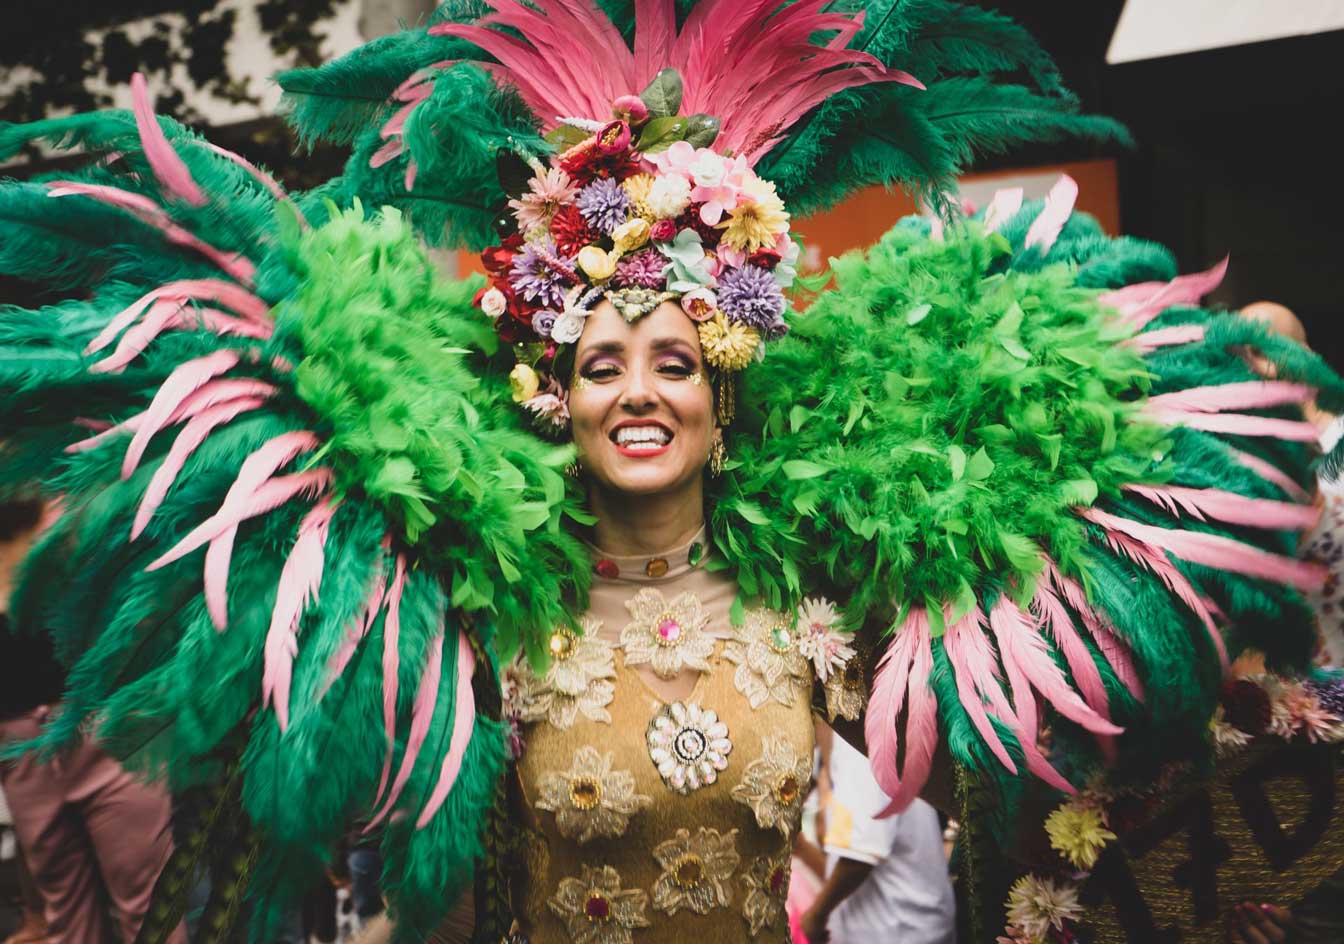 Passista vestida com fantasia de carnaval